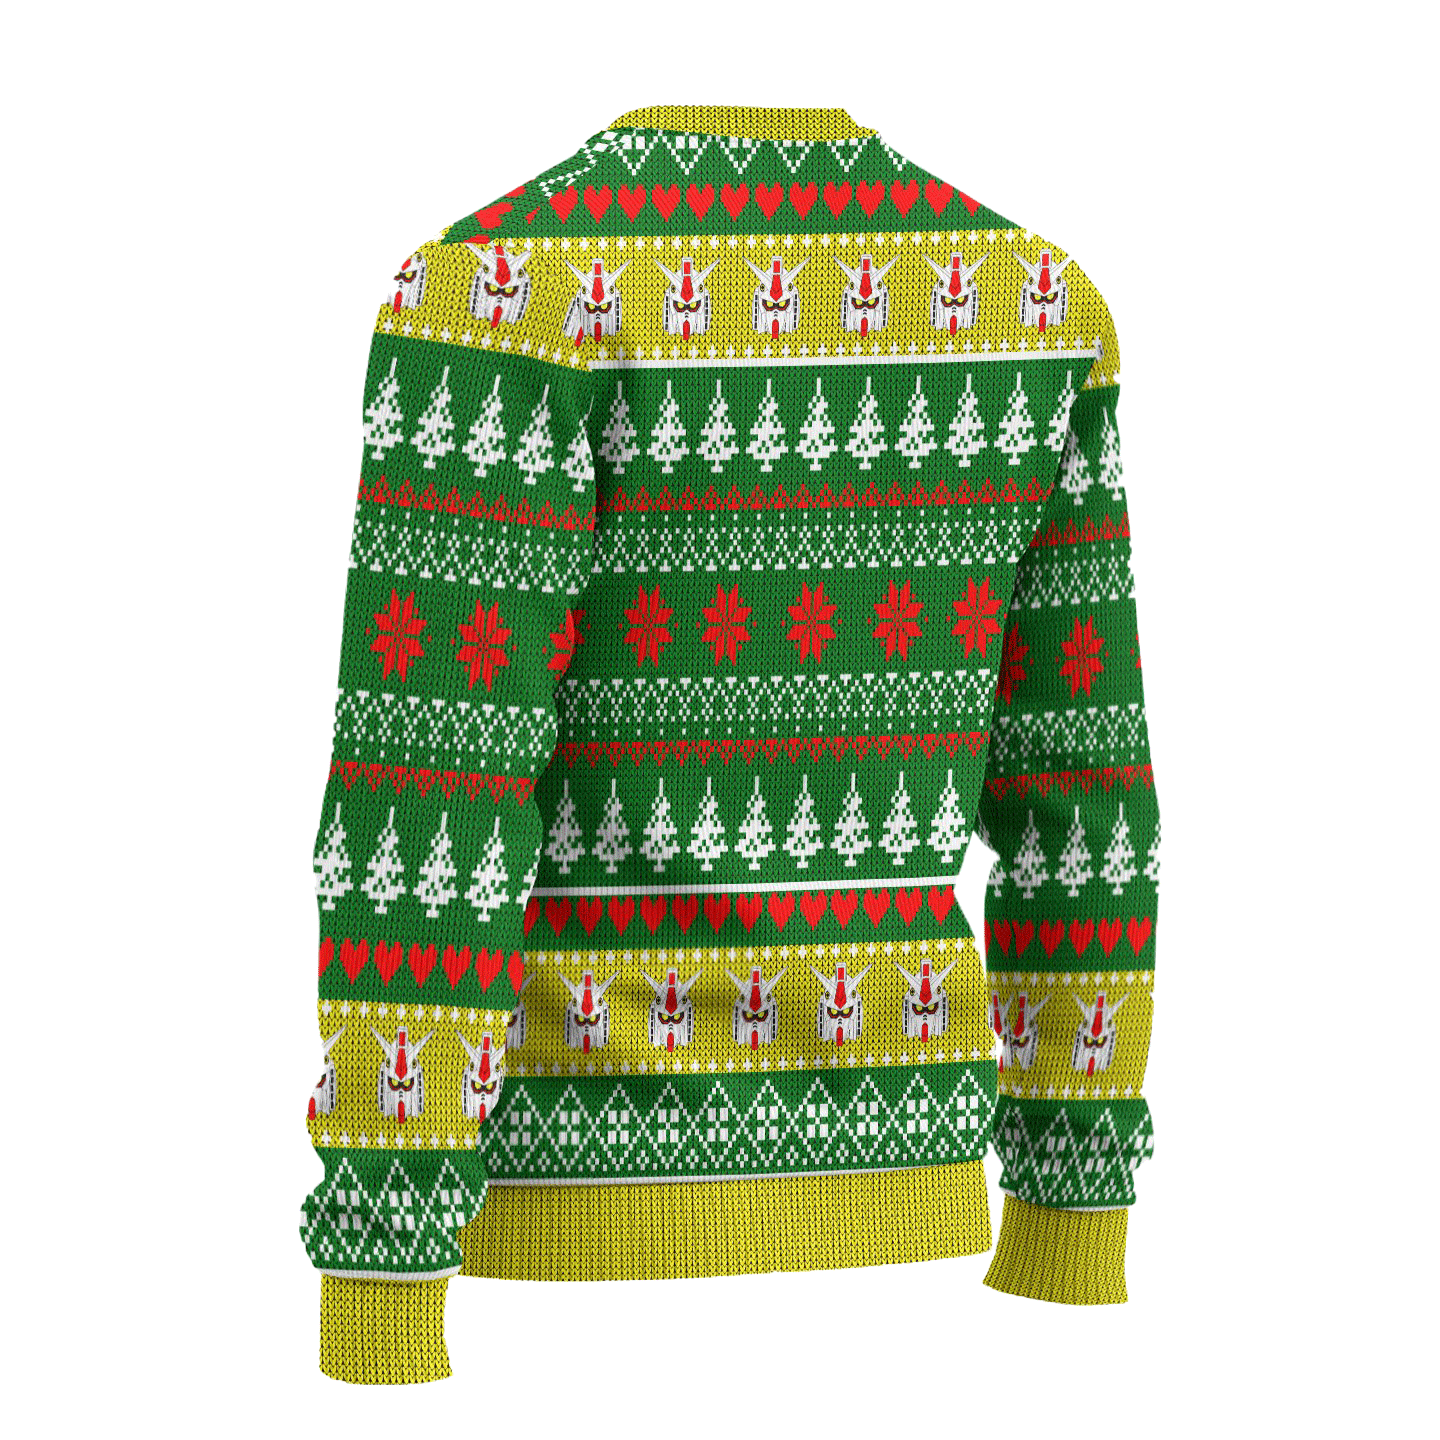 Gundam Anime Ugly Christmas Sweater Custom Pine Tree Xmas Gift